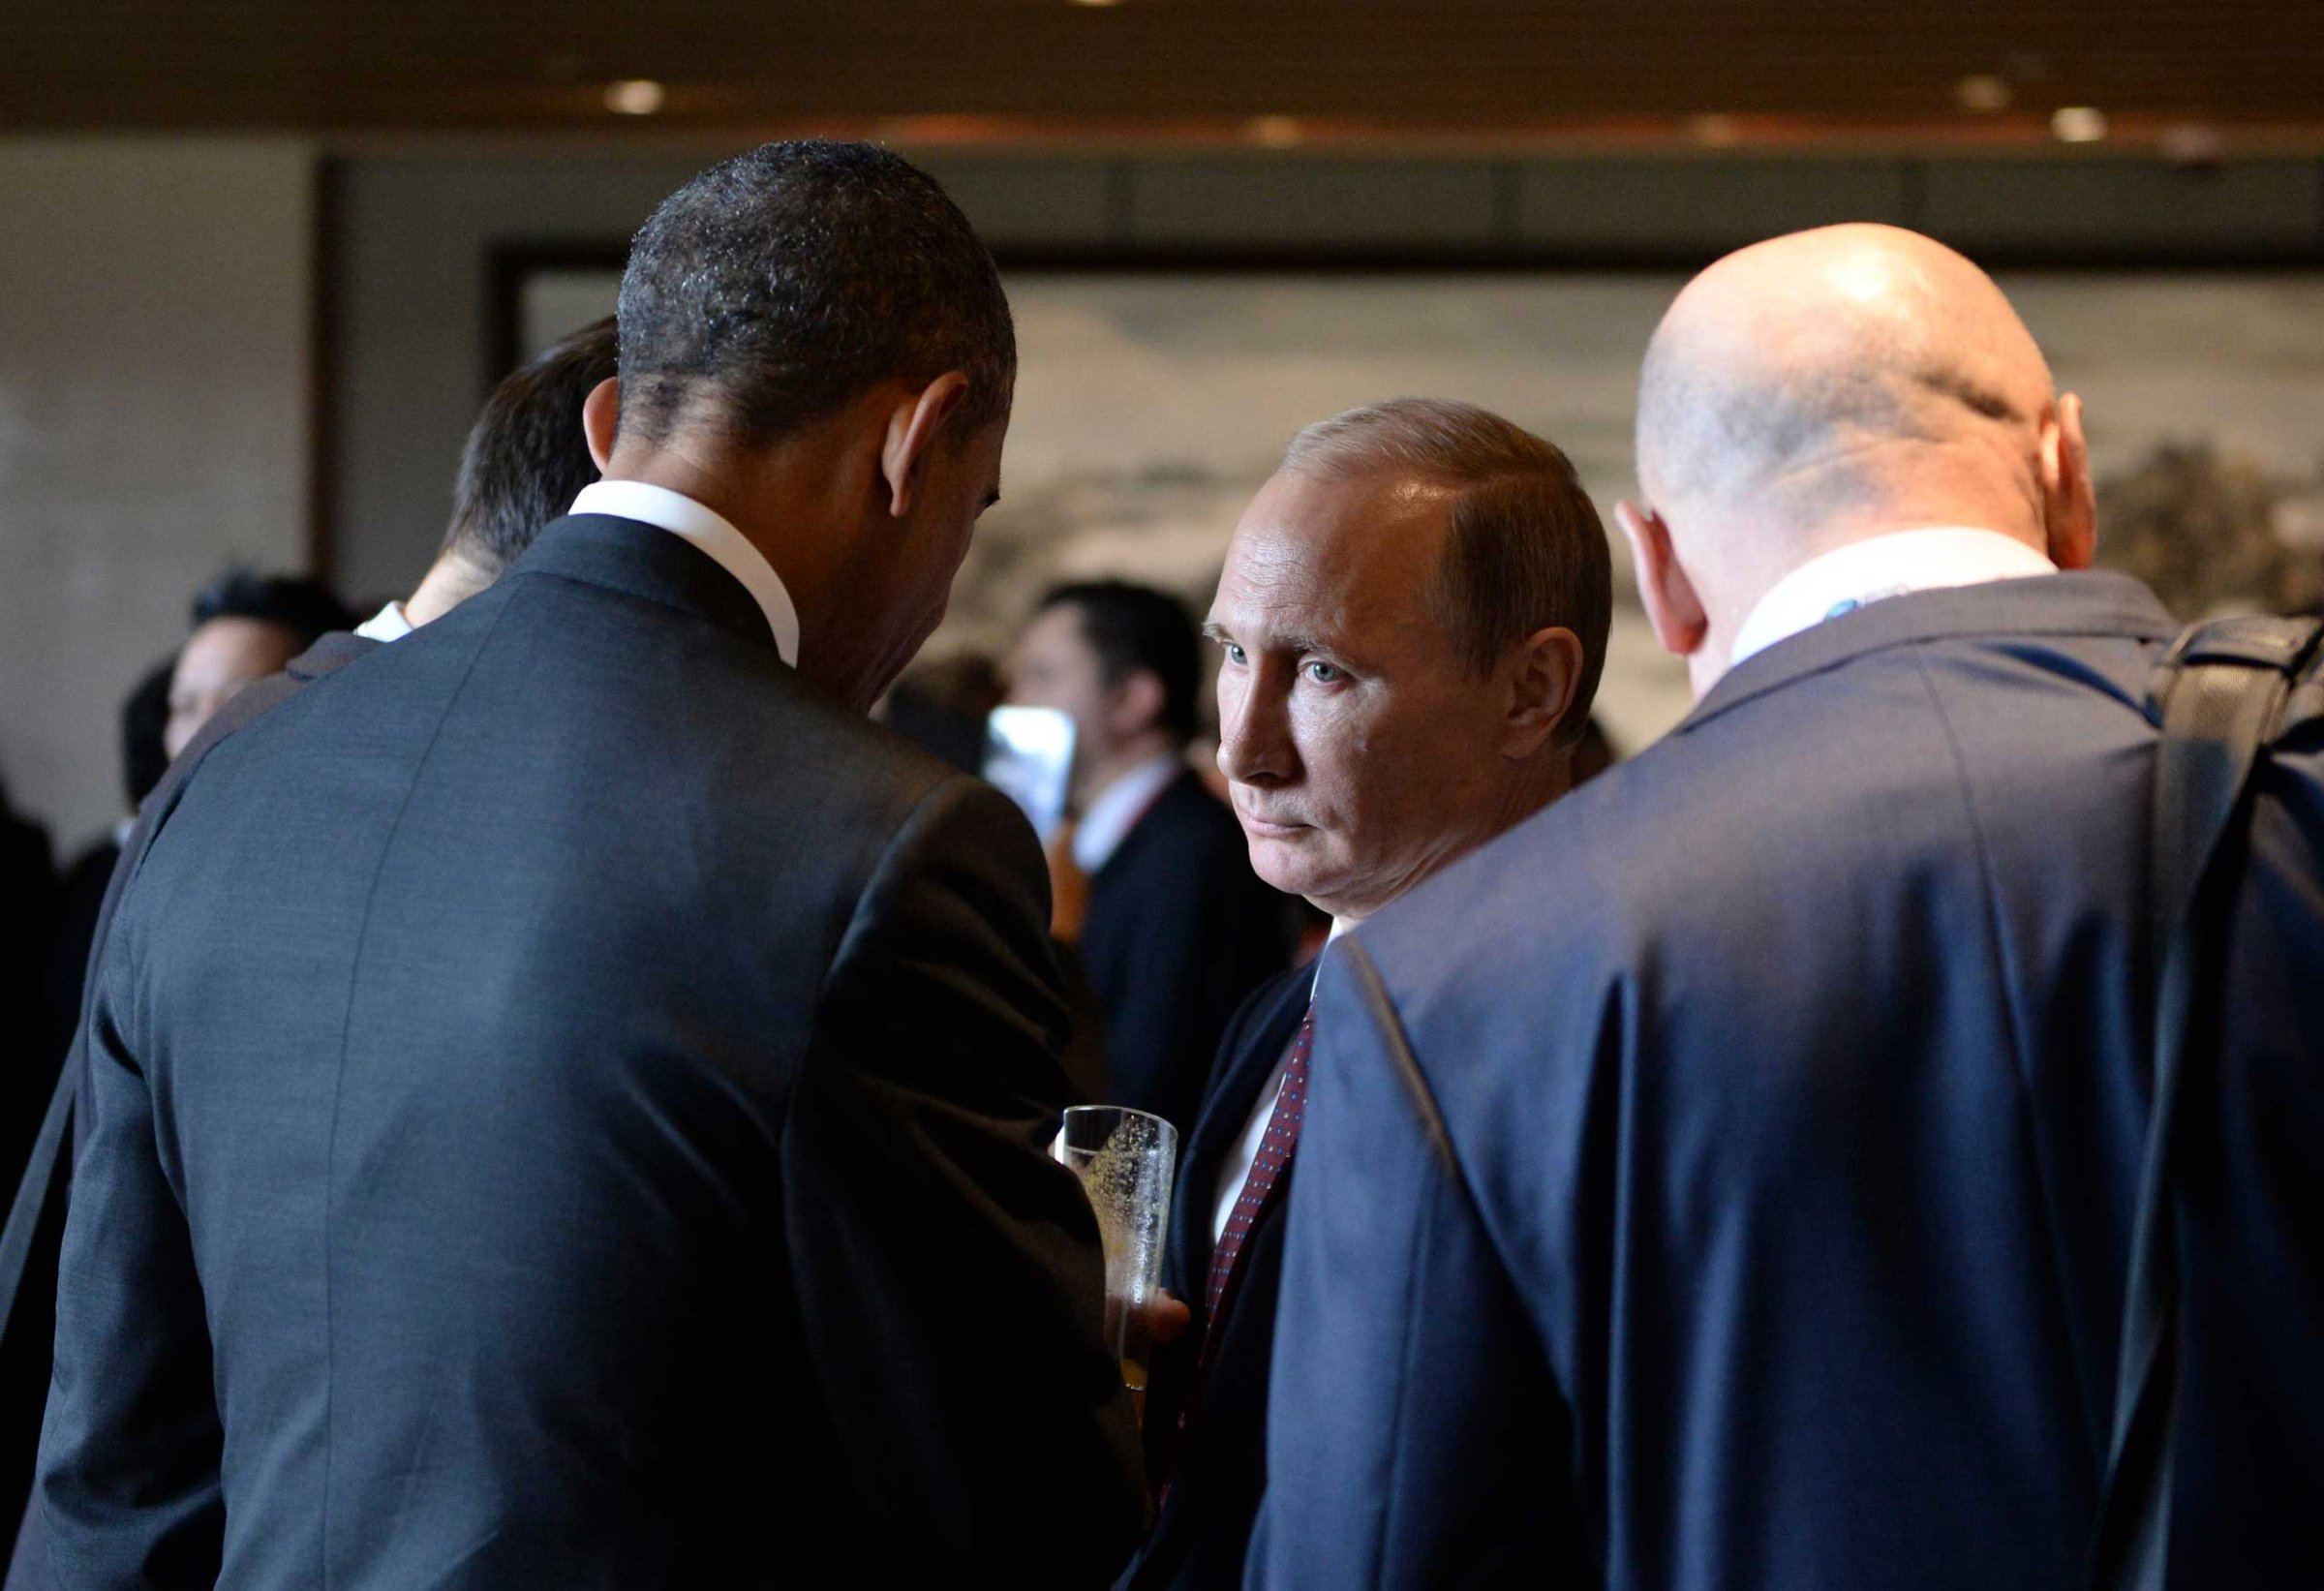 Russian President Vladimir Putin seen talking to President Barack Obama during the Asia Pacific Economic Cooperation Summit in Beijing, Nov. 11, 2014.